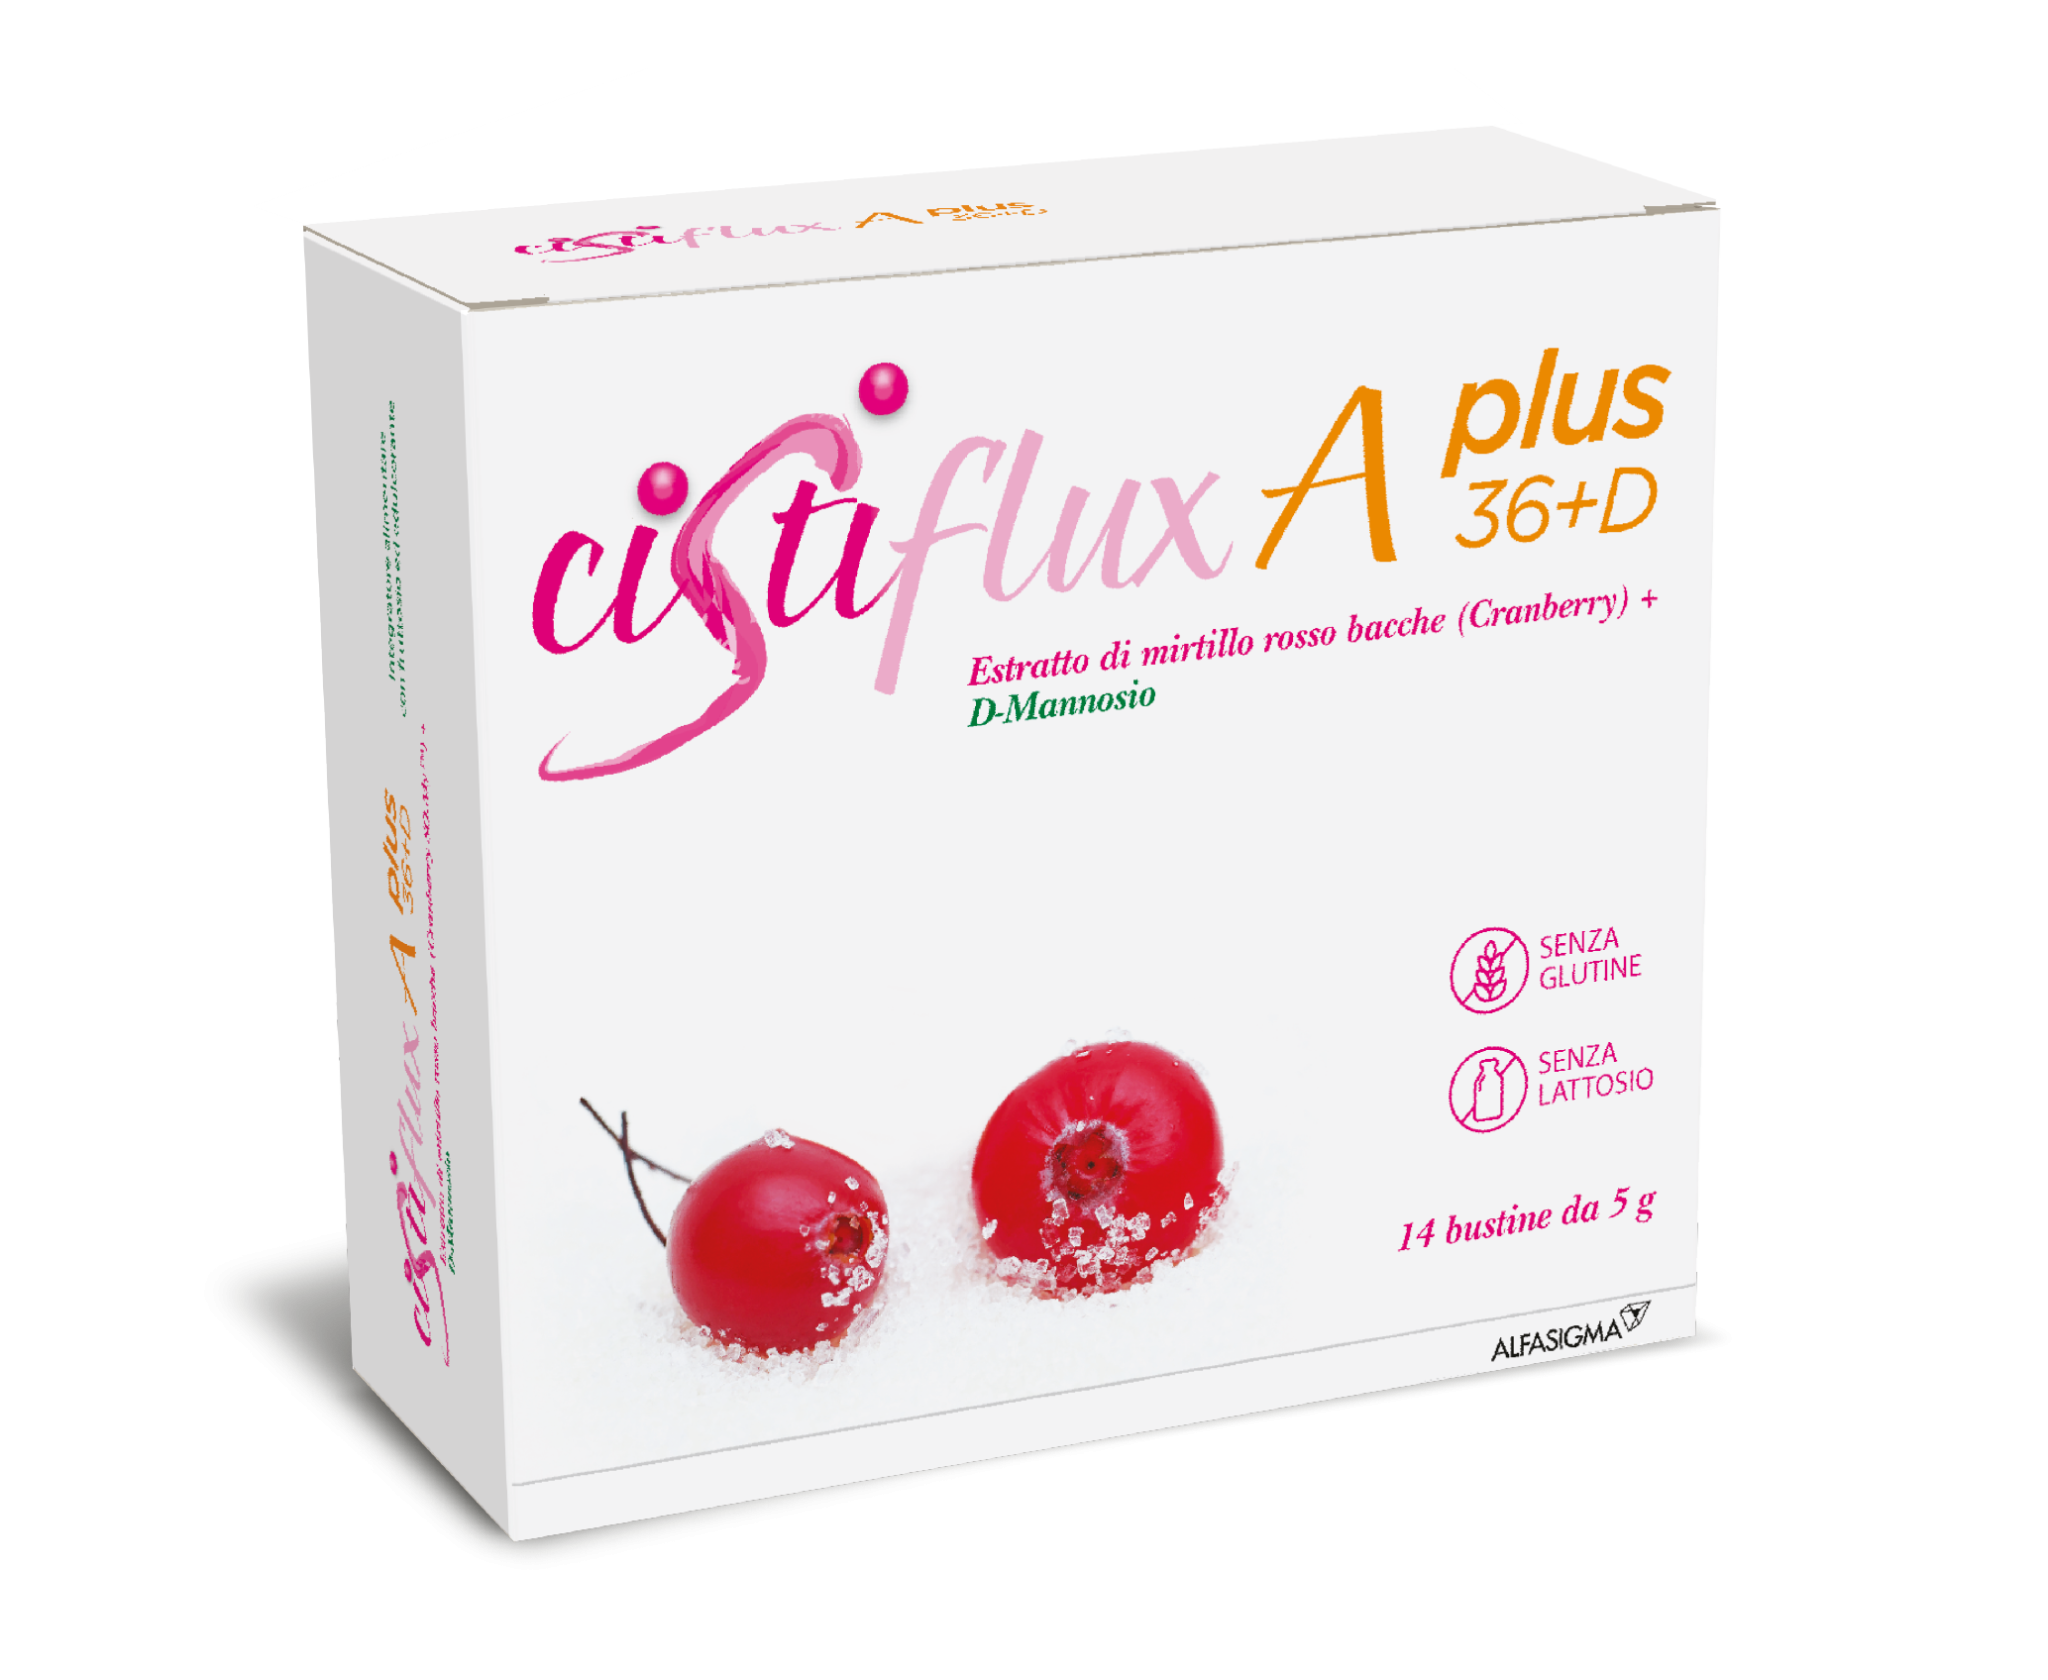 Image of Cistifux A Plus 36+D Alfasigma 14 Bustine Da 5g